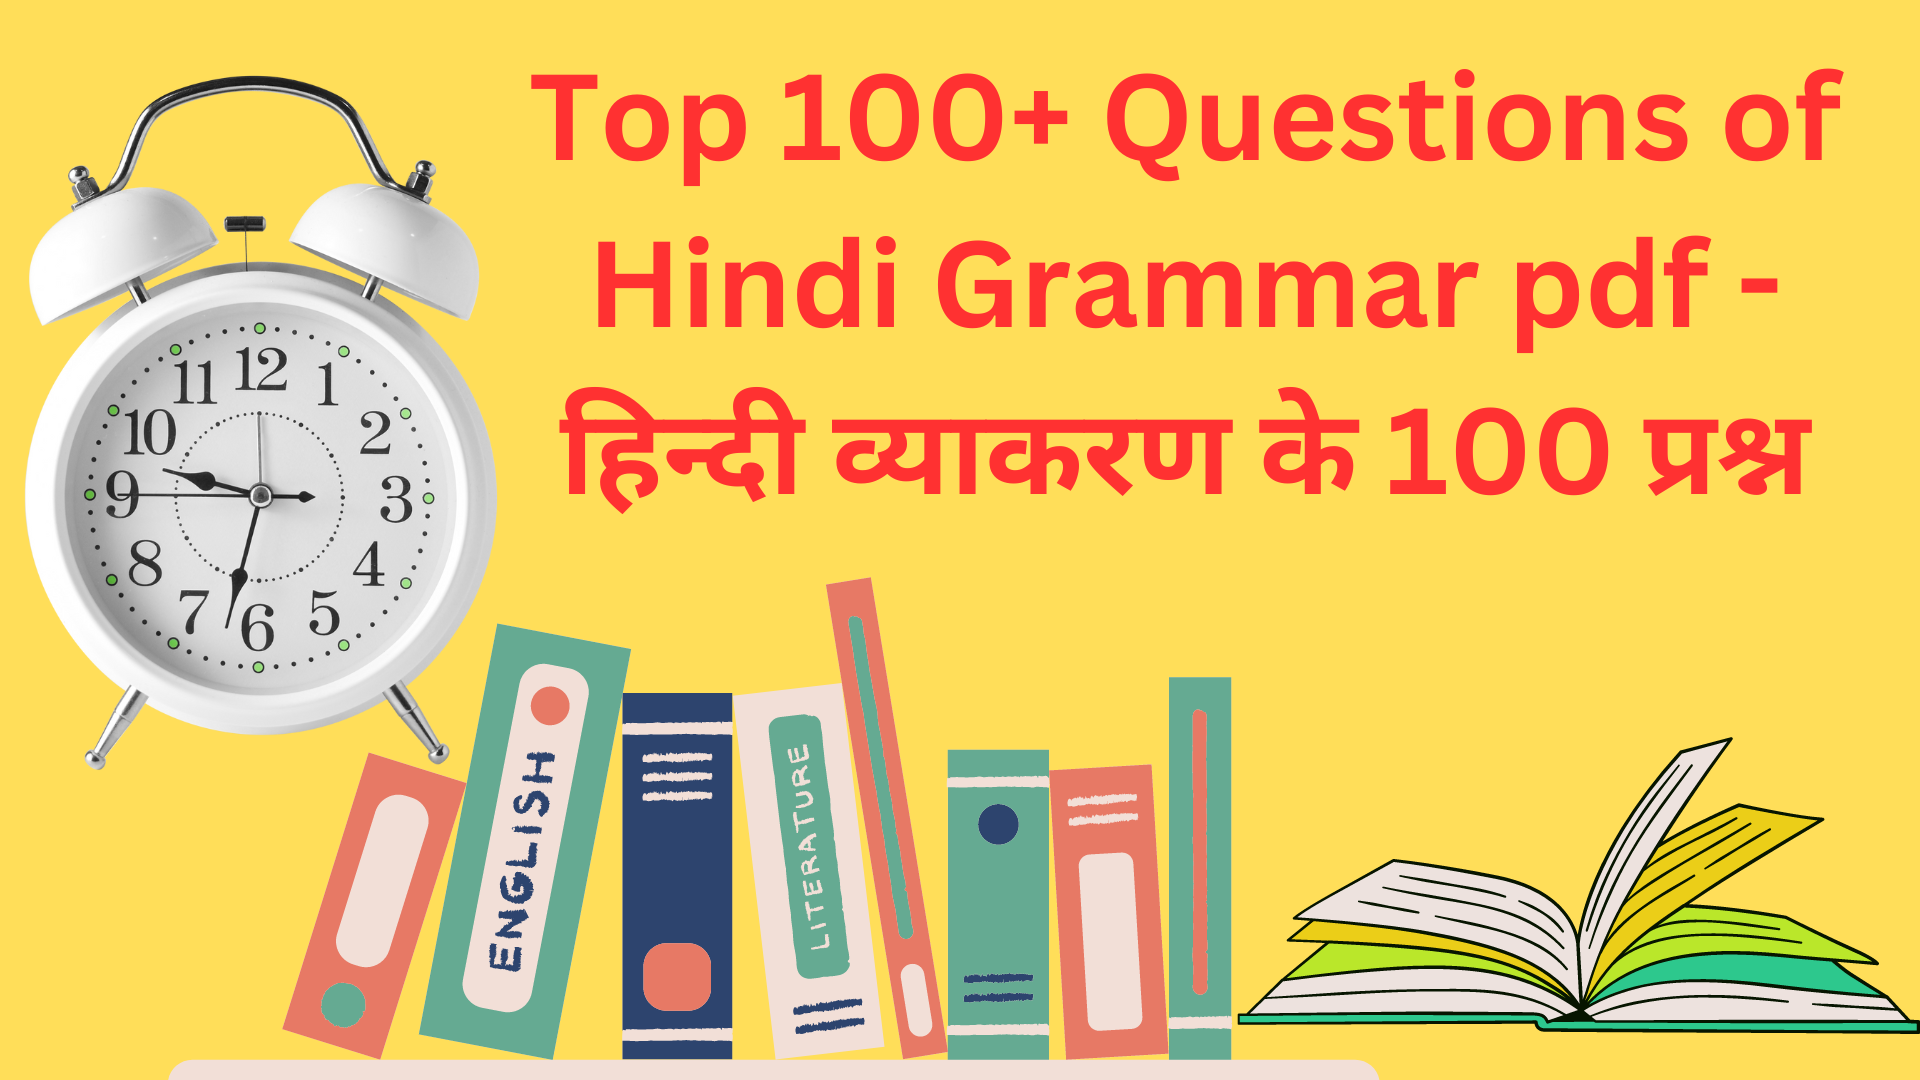 Top 100+ Questions of Hindi Grammar pdf - हिन्दी व्याकरण के 100 प्रश्न